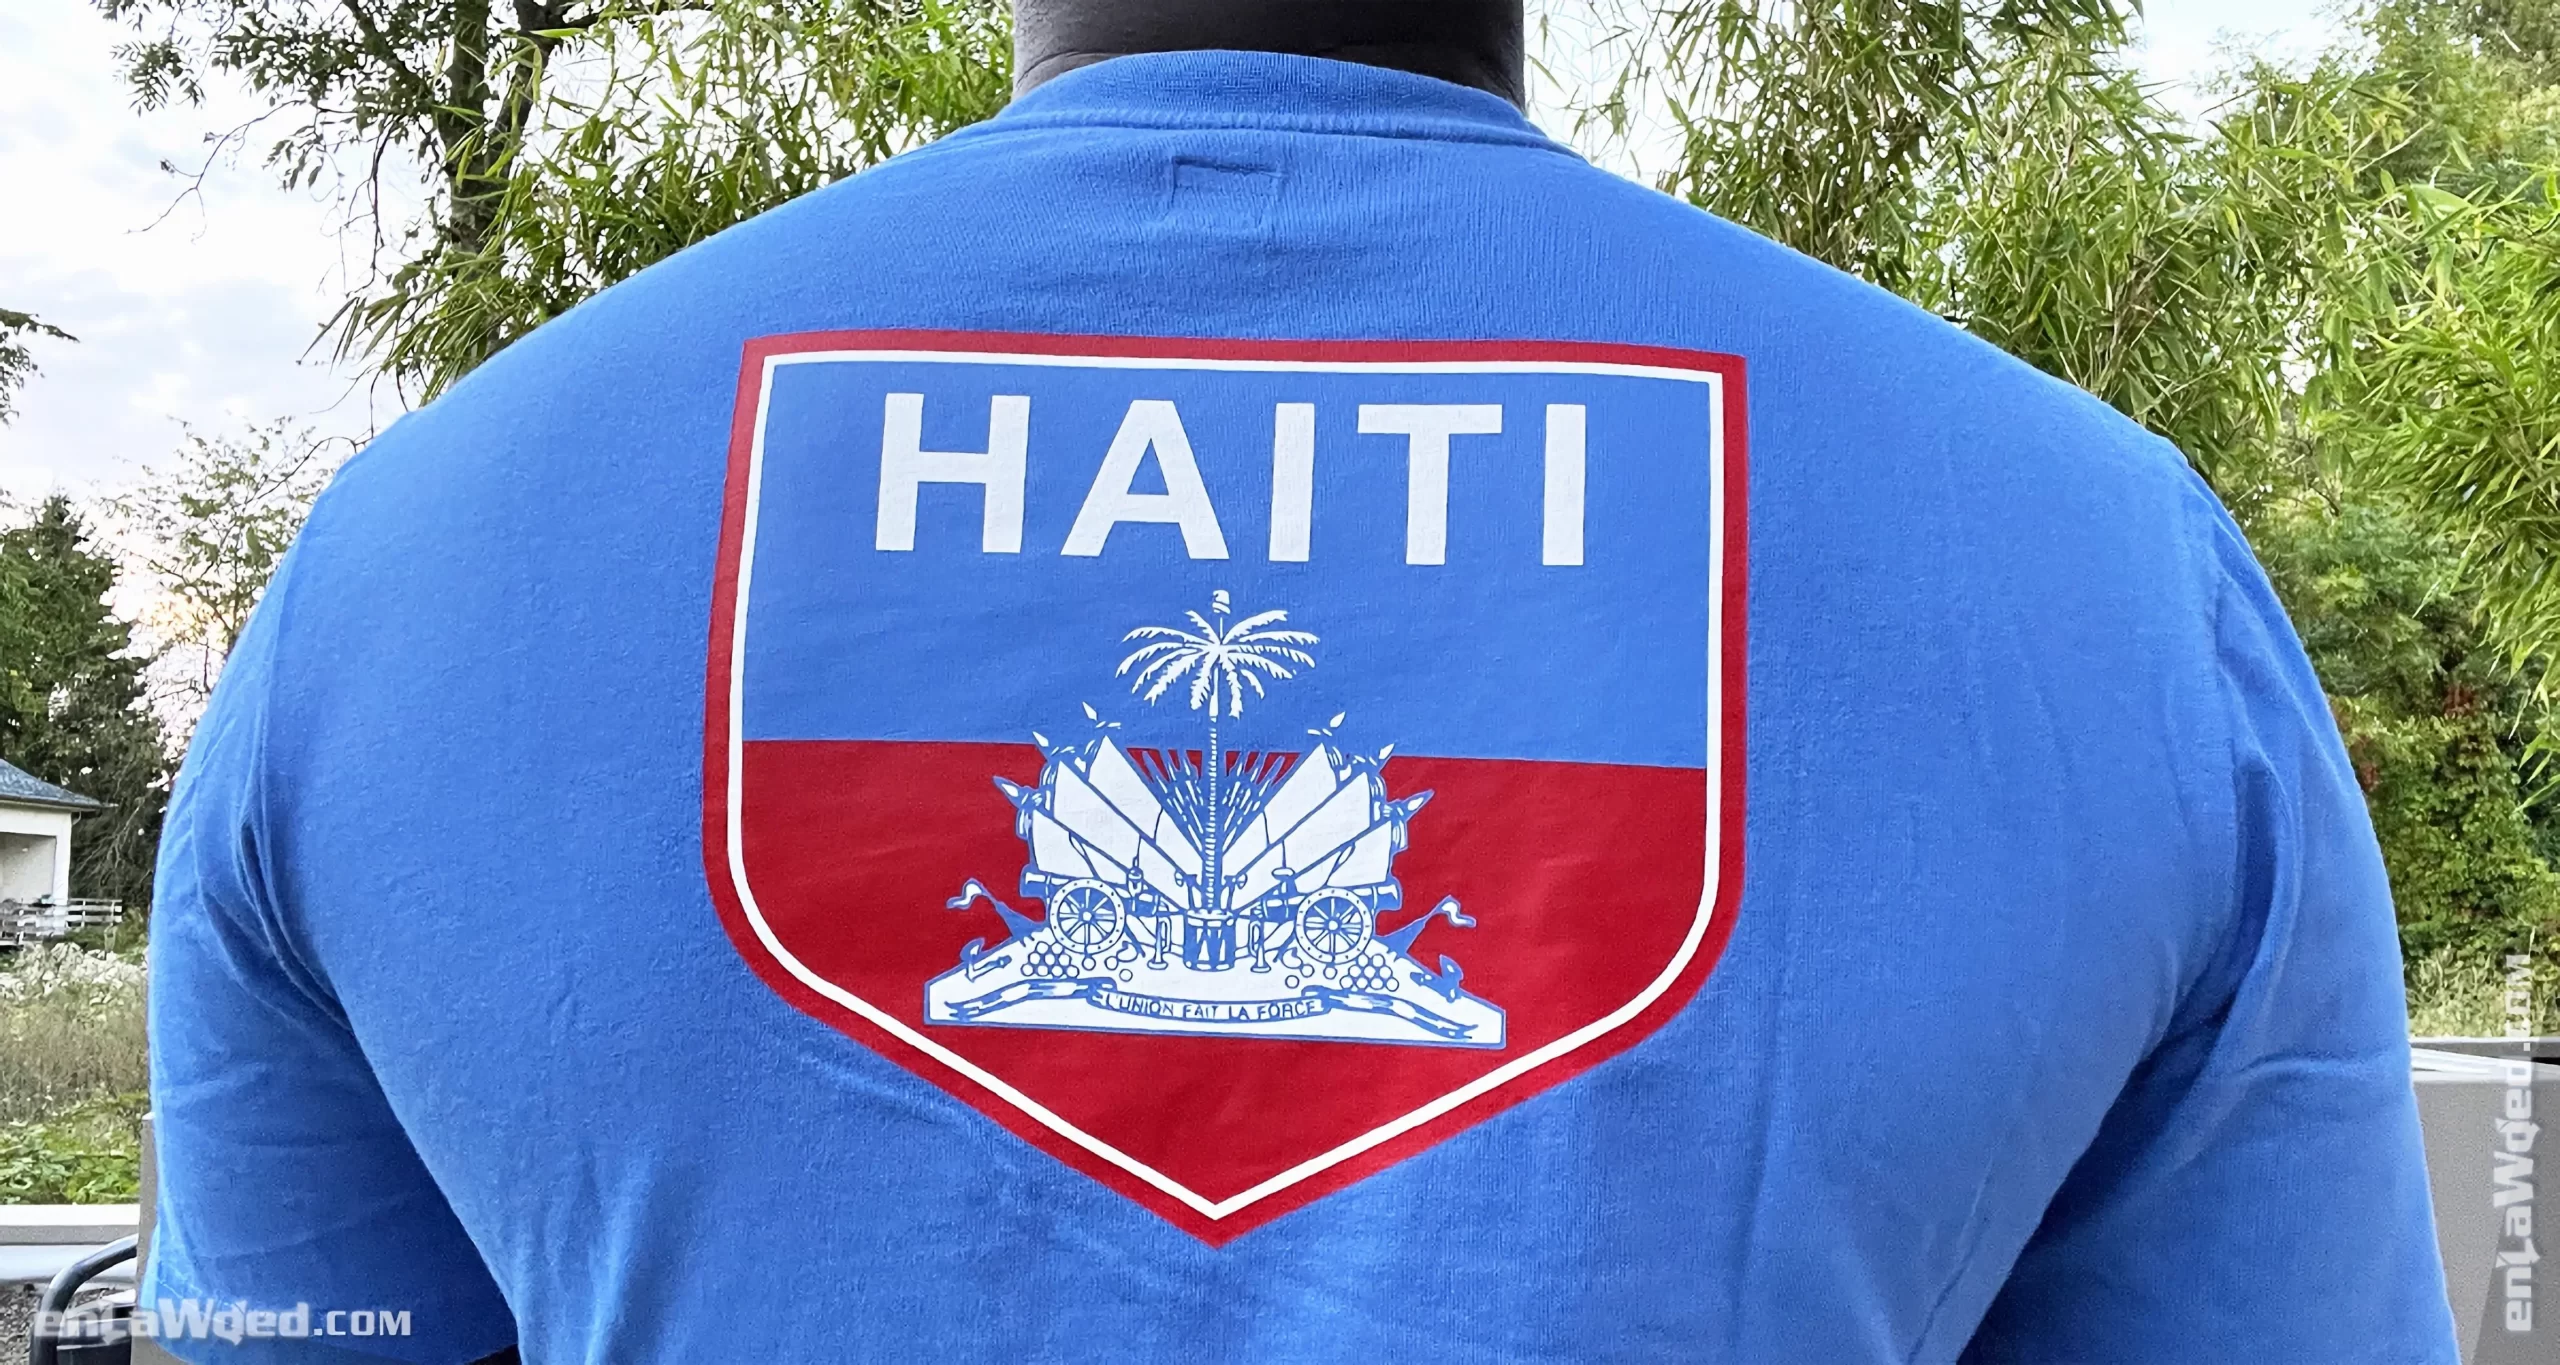 Men’s 2007 Haiti T-Shirt by Adidas Originals: Uplifted (EnLawded.com file #lp1n81mj126197eag5smj2v2q)